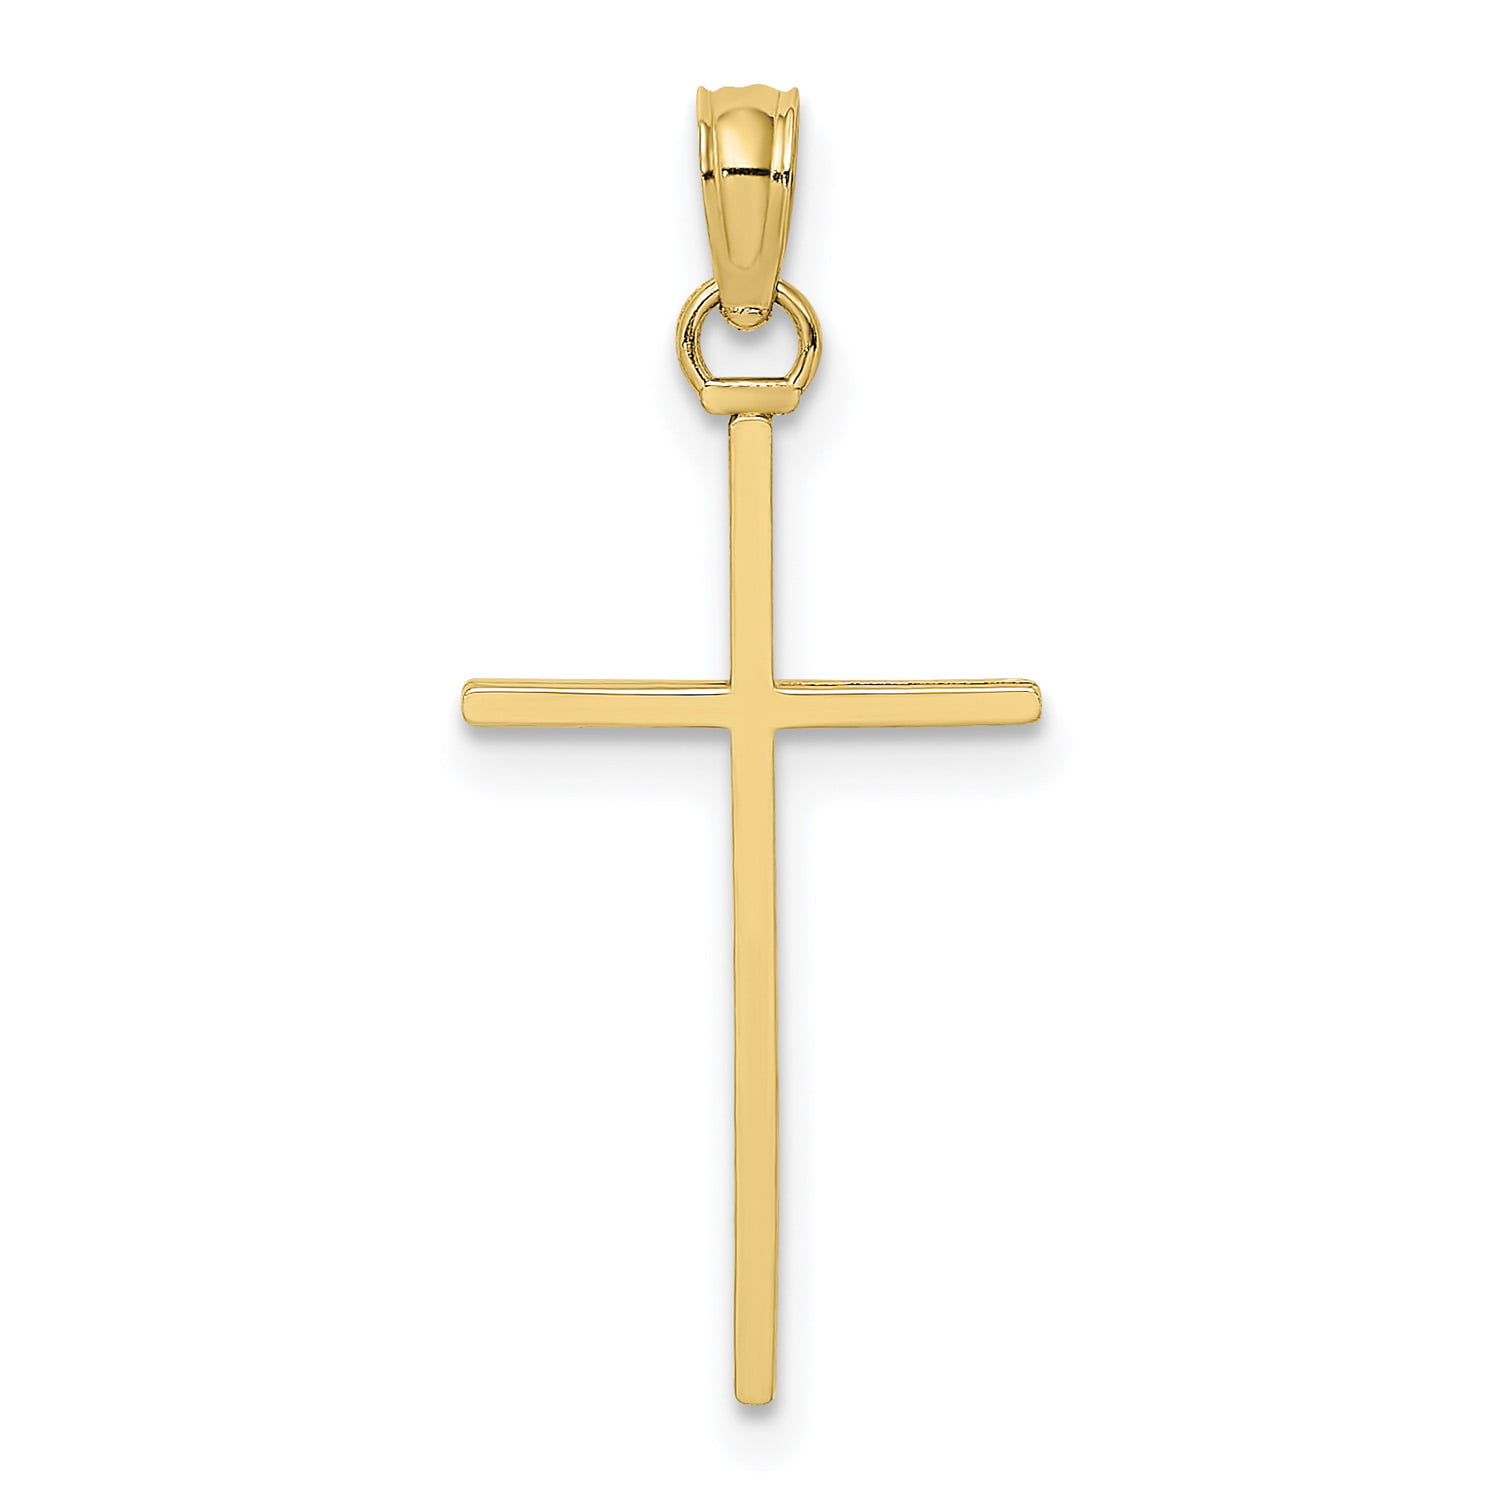 Polished 14K Yellow Gold Plain Religious Cross Pendant Necklace